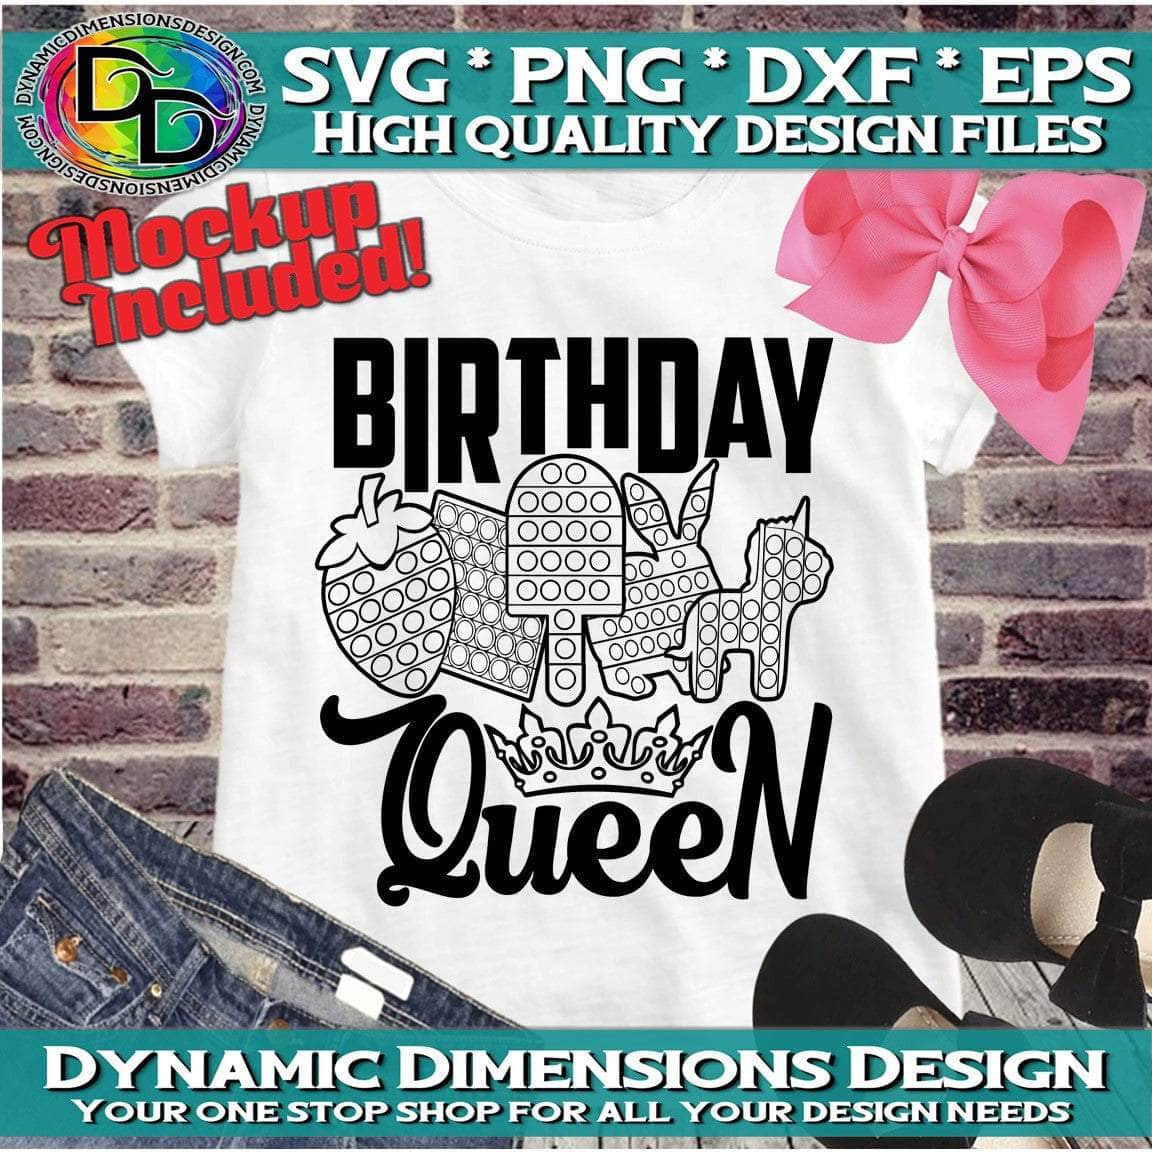 Fidget Birthday Queen svg, png, instant download, dxf, eps, pdf, jpg, cricut, silhouette, sublimtion, printable